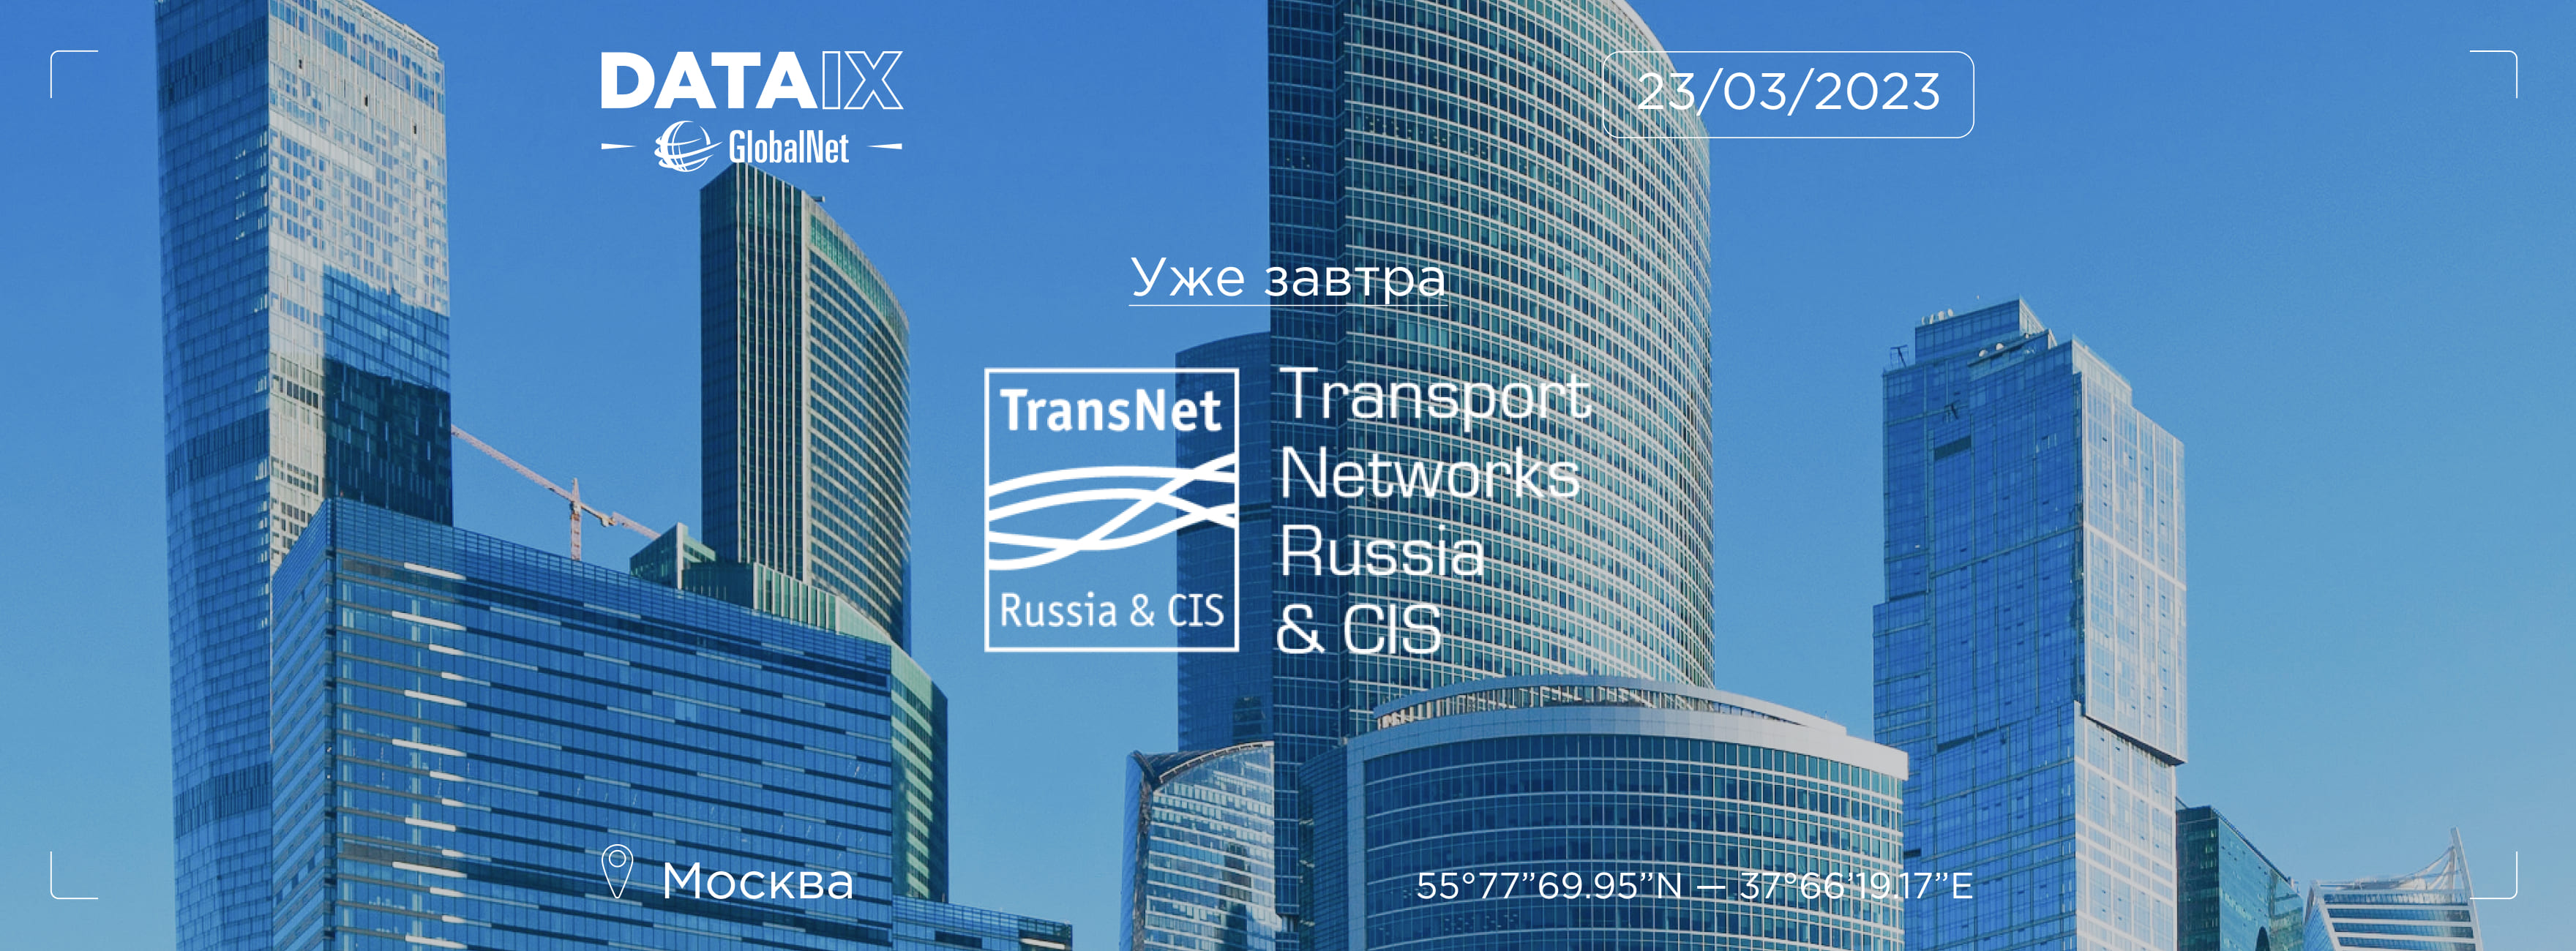 Конференция Transport Networks Russia & CIS 2023 уже завтра!